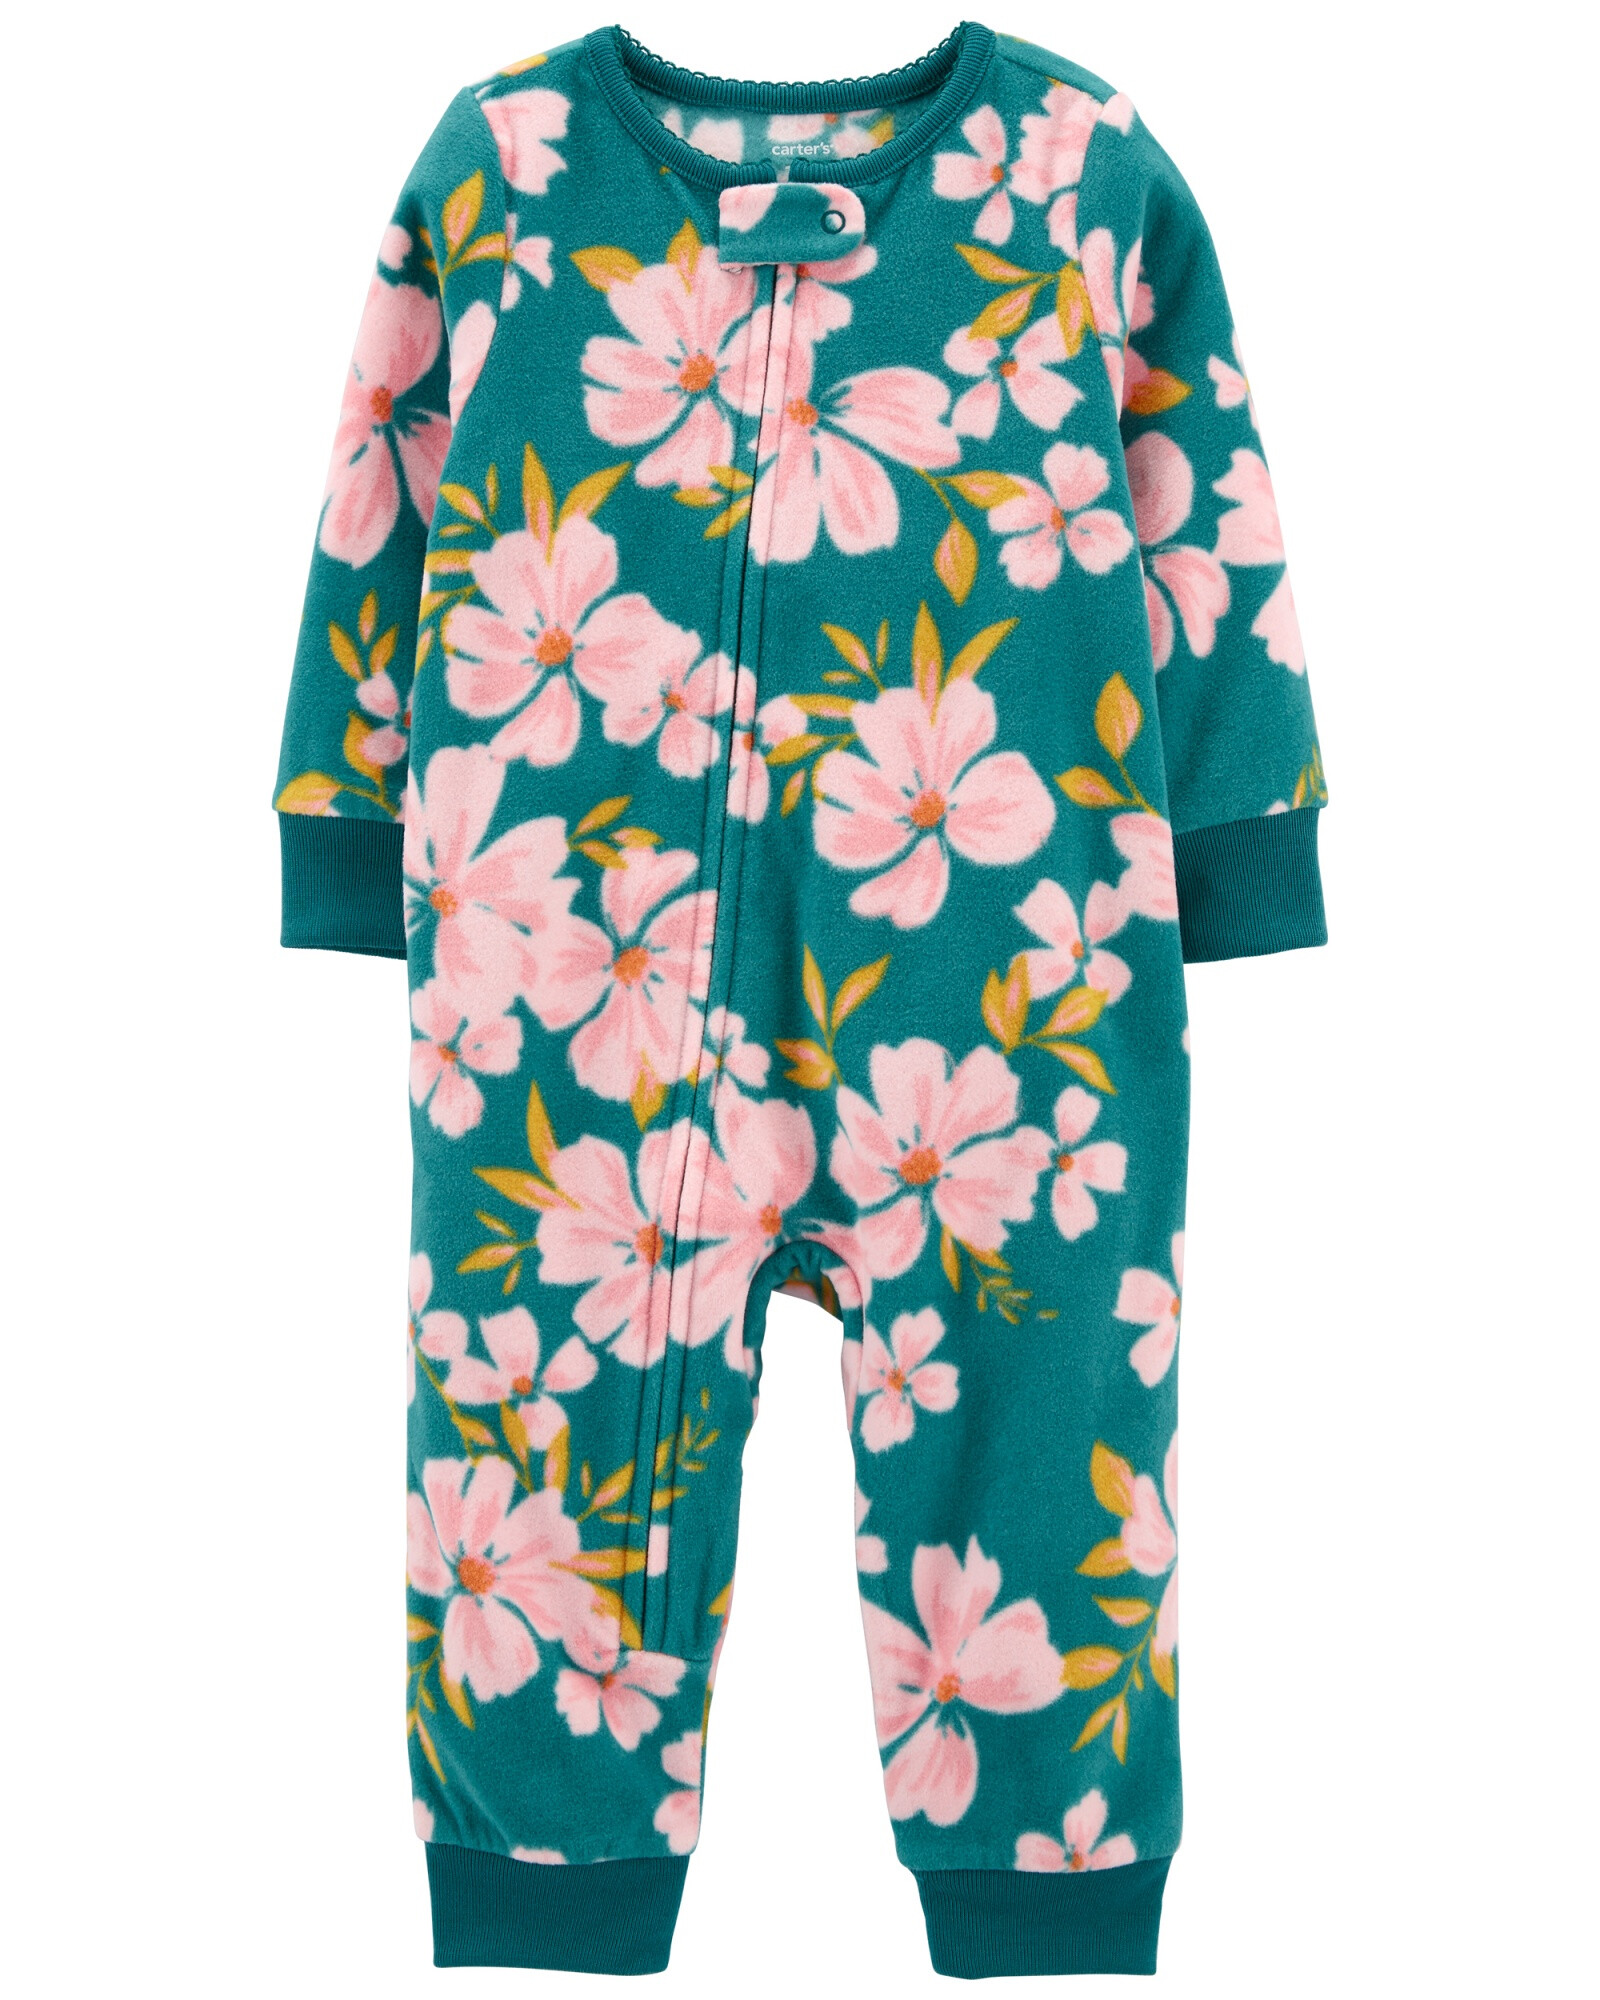 Pijama de micropolar floreado 0